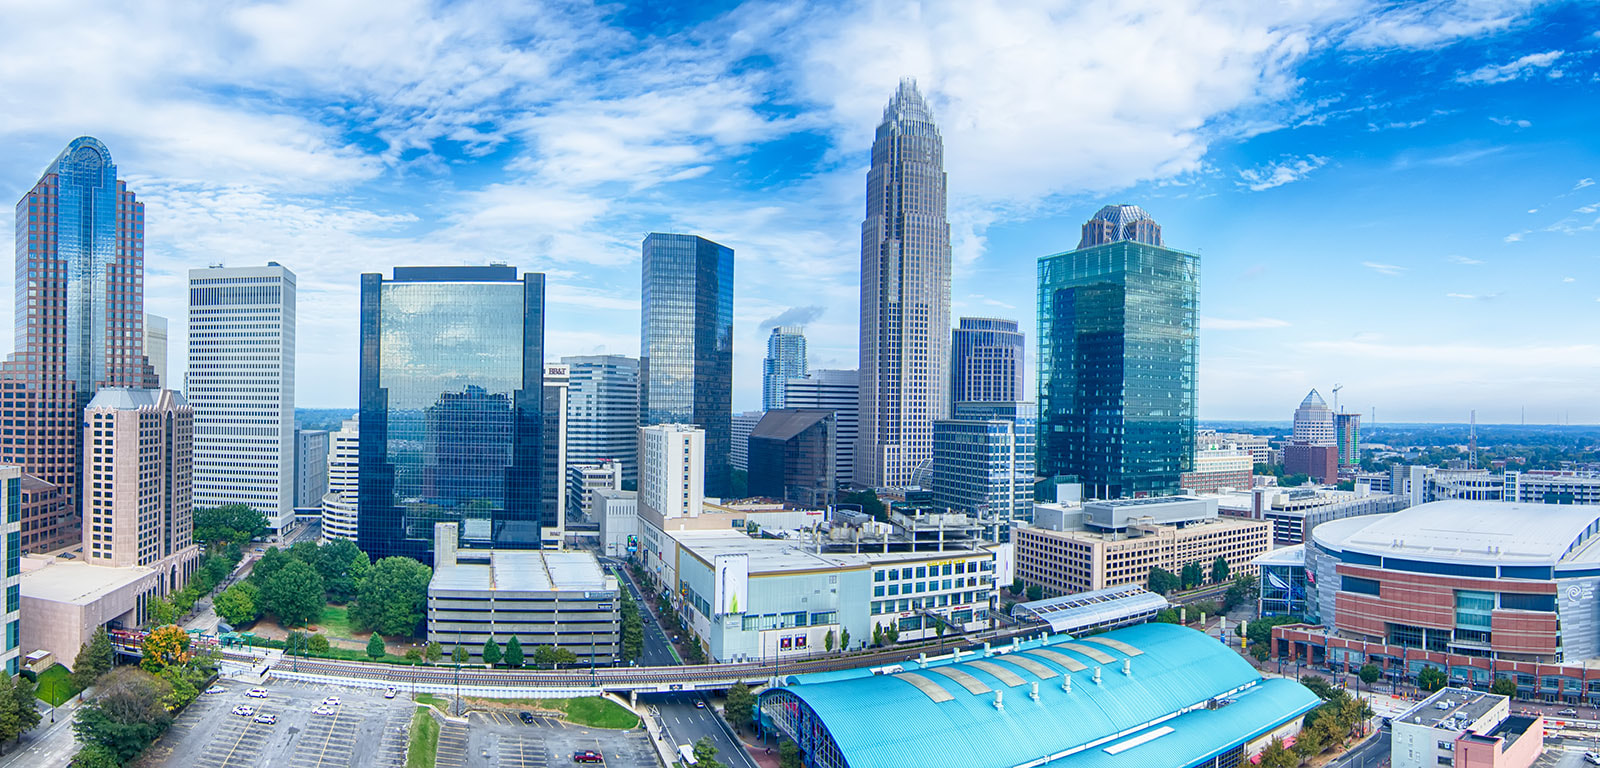 the city of Charlotte, North Carolina panorama view